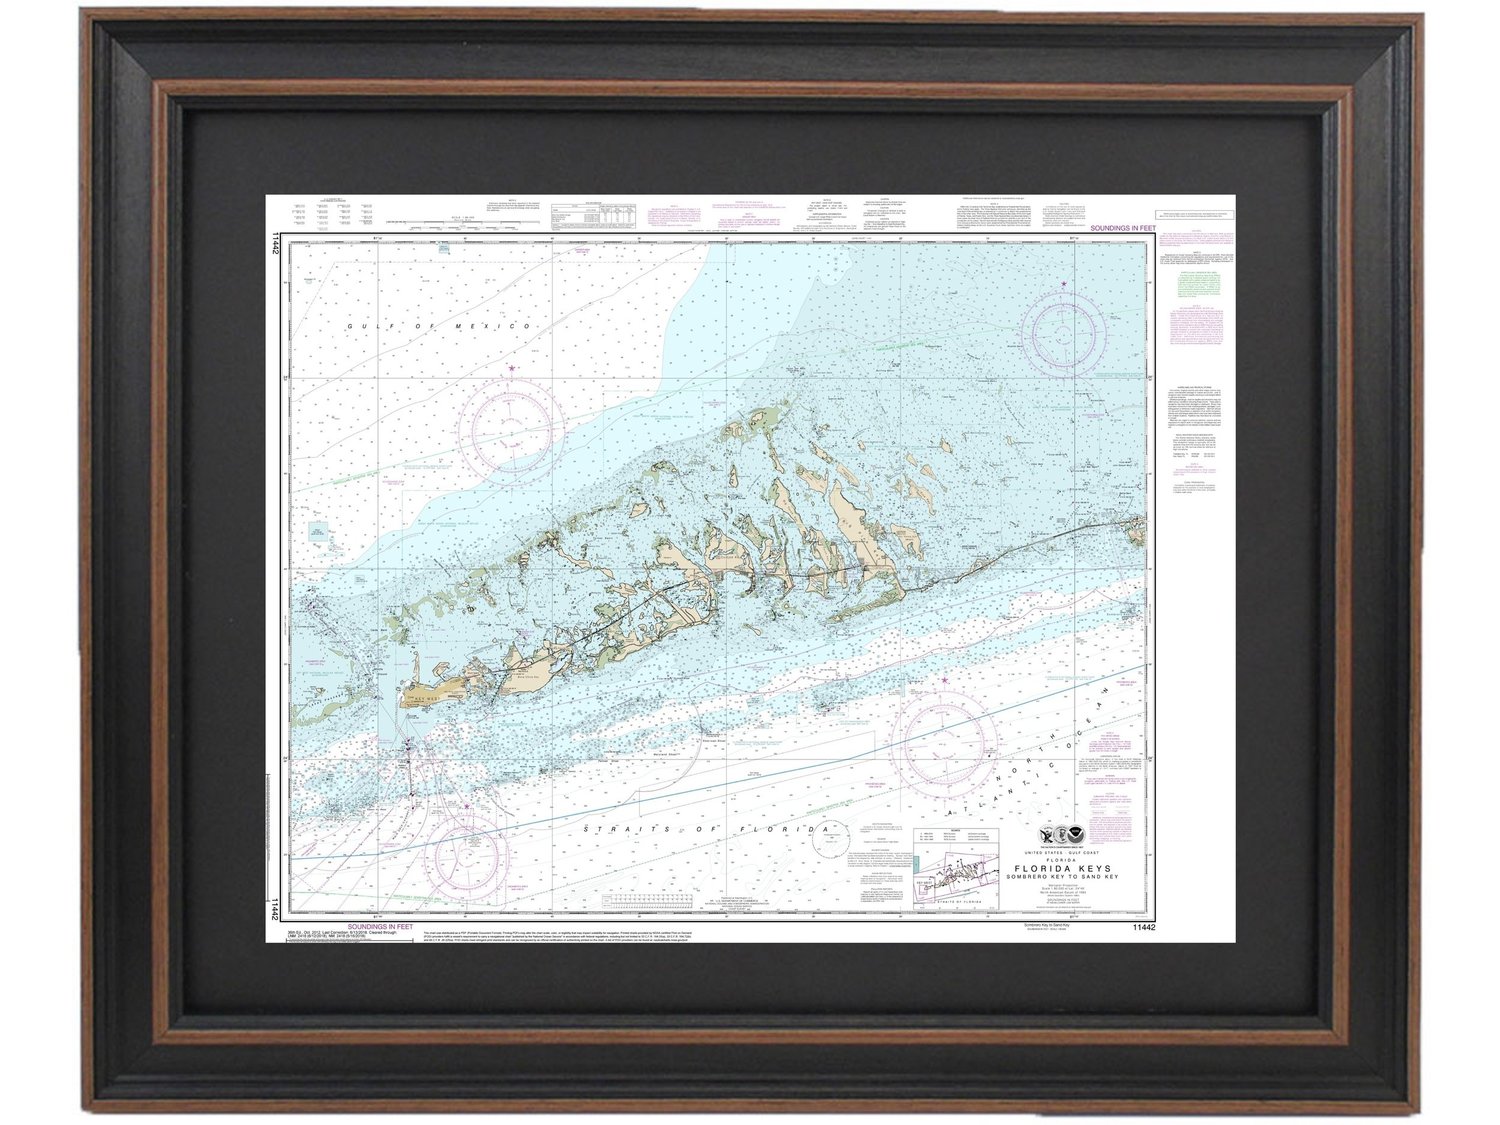 Framed Nautical Maps Framed Nautical Map 11442